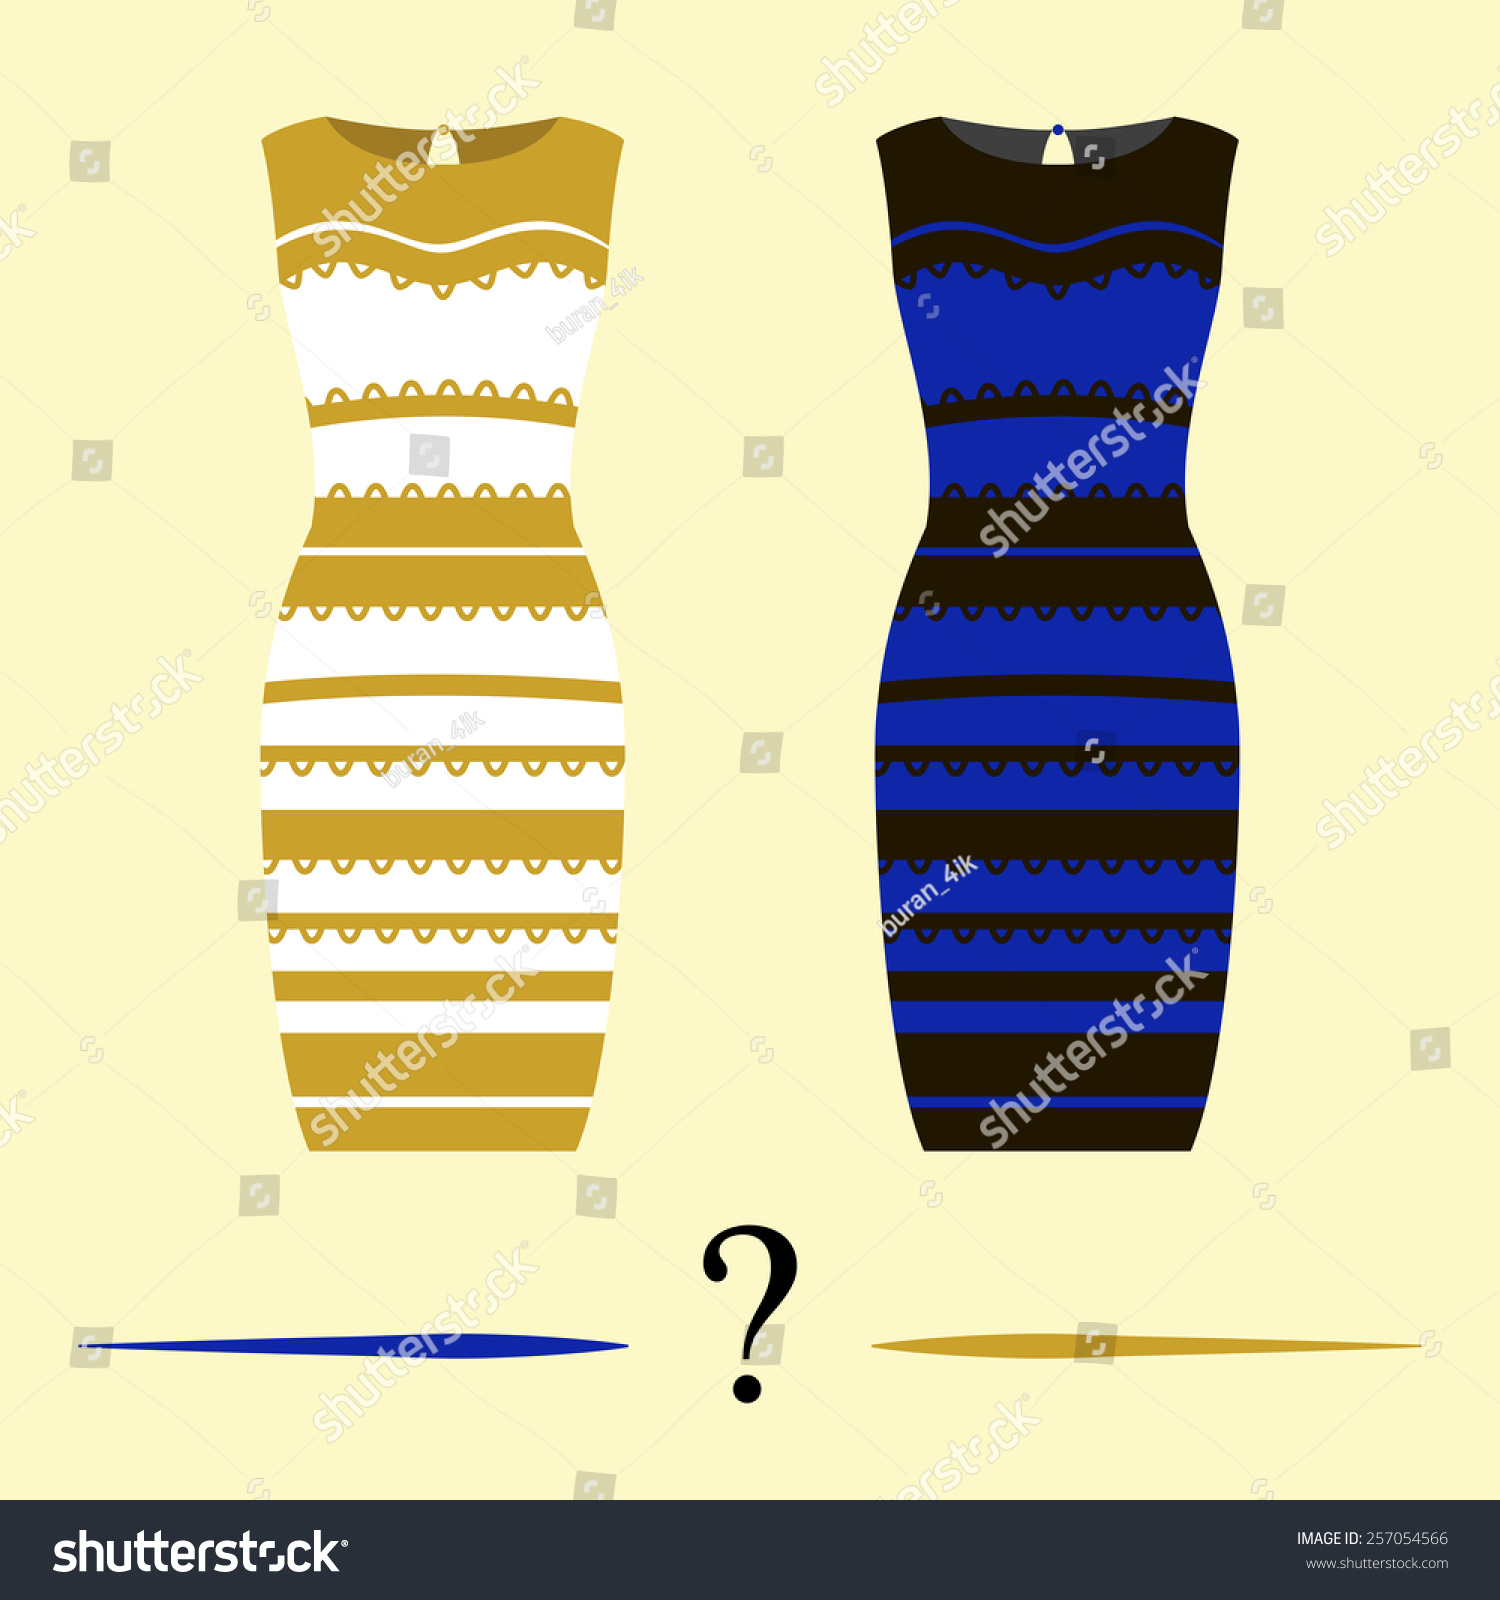 stock-vector-vector-illustration-of-the-dress-black-and-blue-or-white-and-gold-internet-meme-257054566.jpg